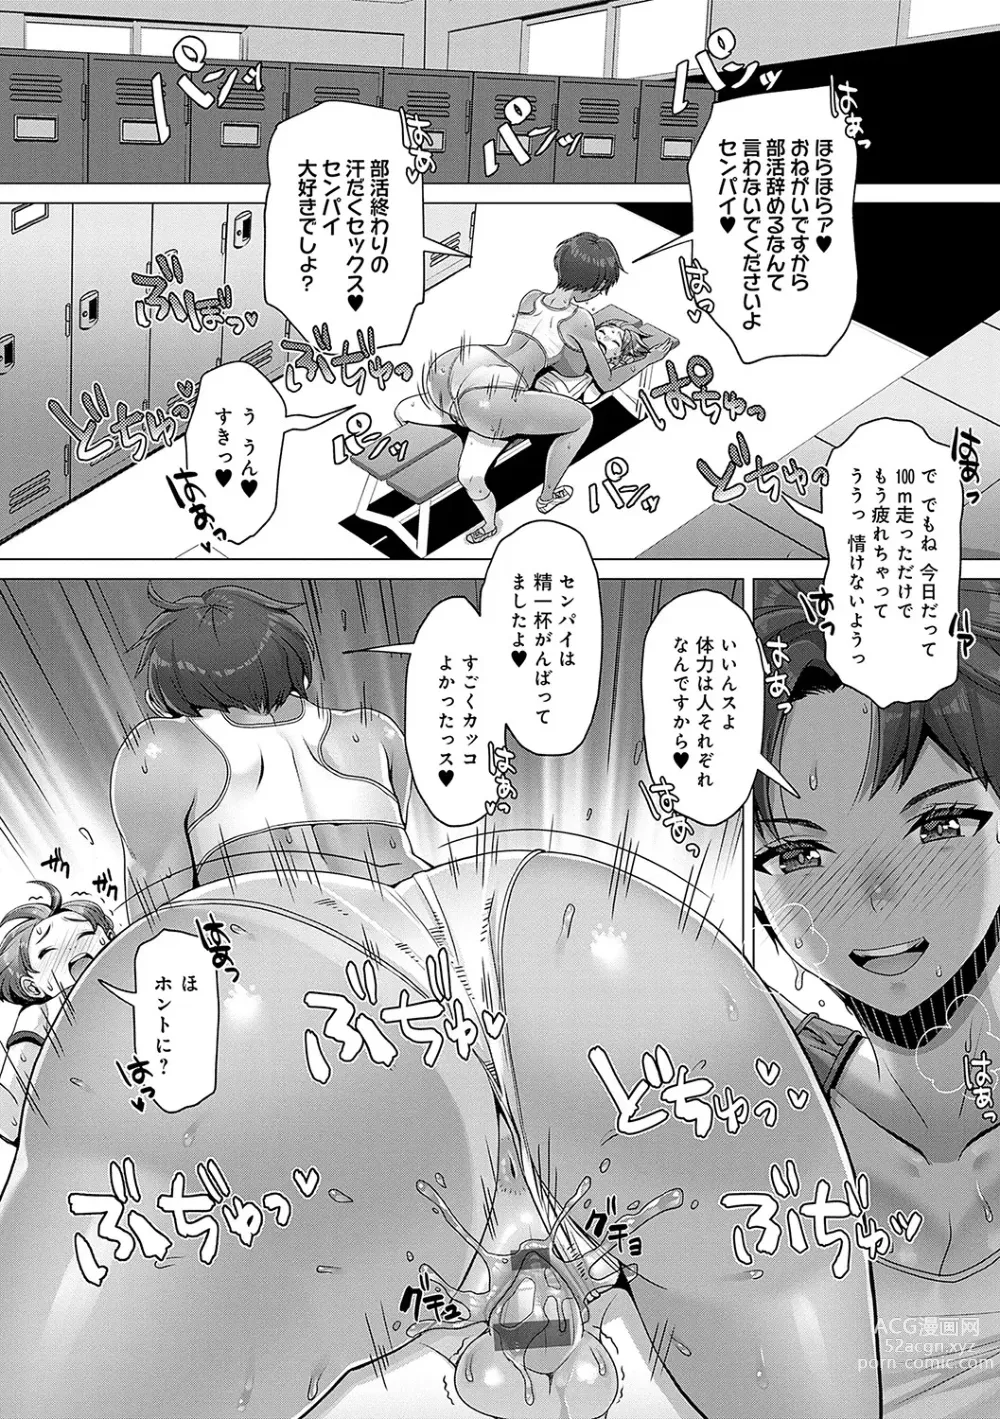 Page 21 of manga Gaman shitemo, dechau.